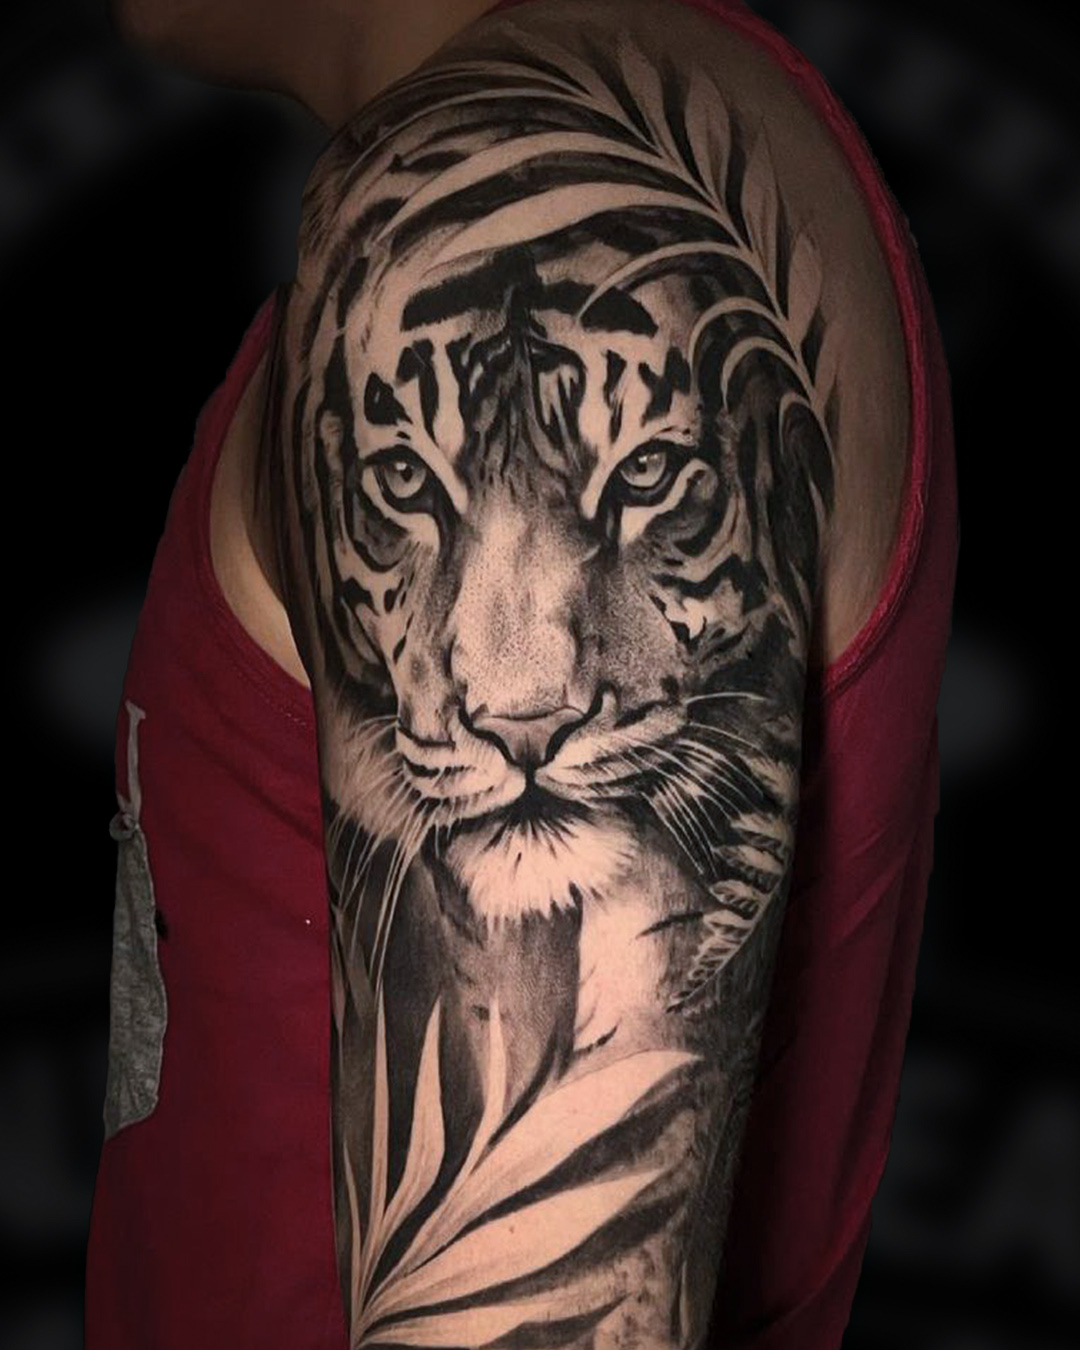 Tiger tattoo fra Christina i Beauty and the Beast Tattoo - Herning